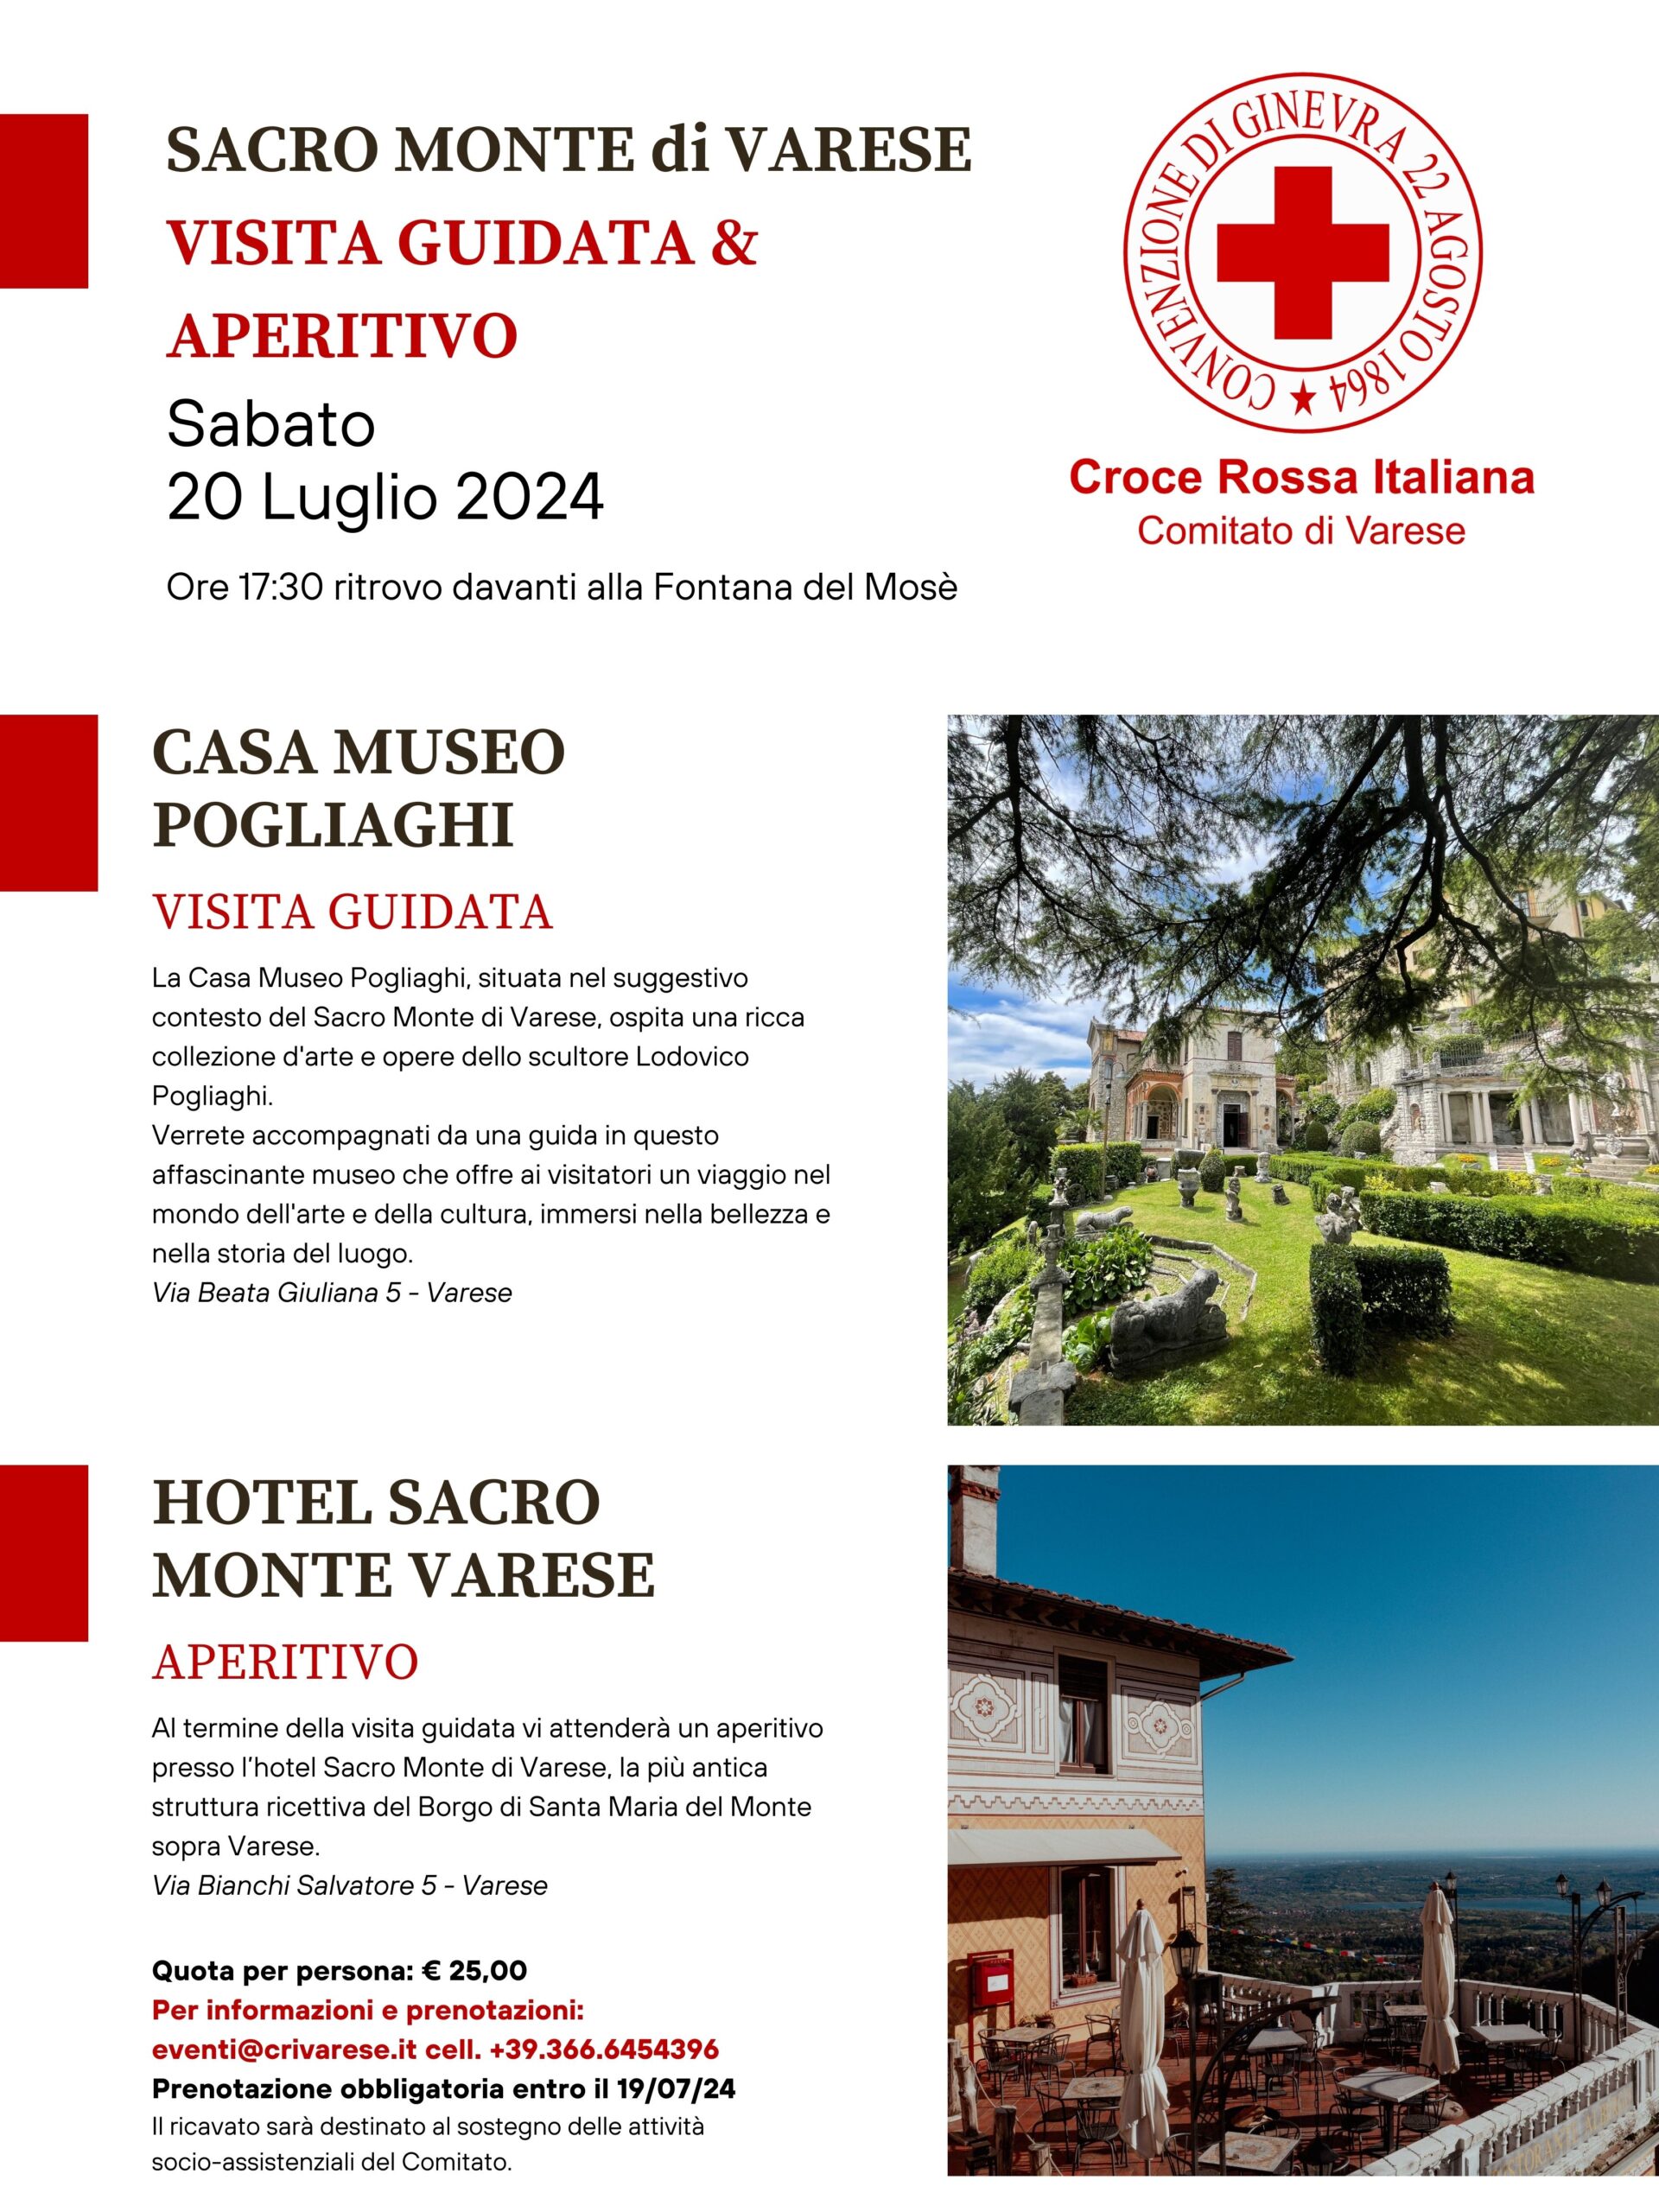 Visita guidata al Sacro Monte di Varese & Aperitivo – 20 Luglio 2024 @ Sacro Monte Varese